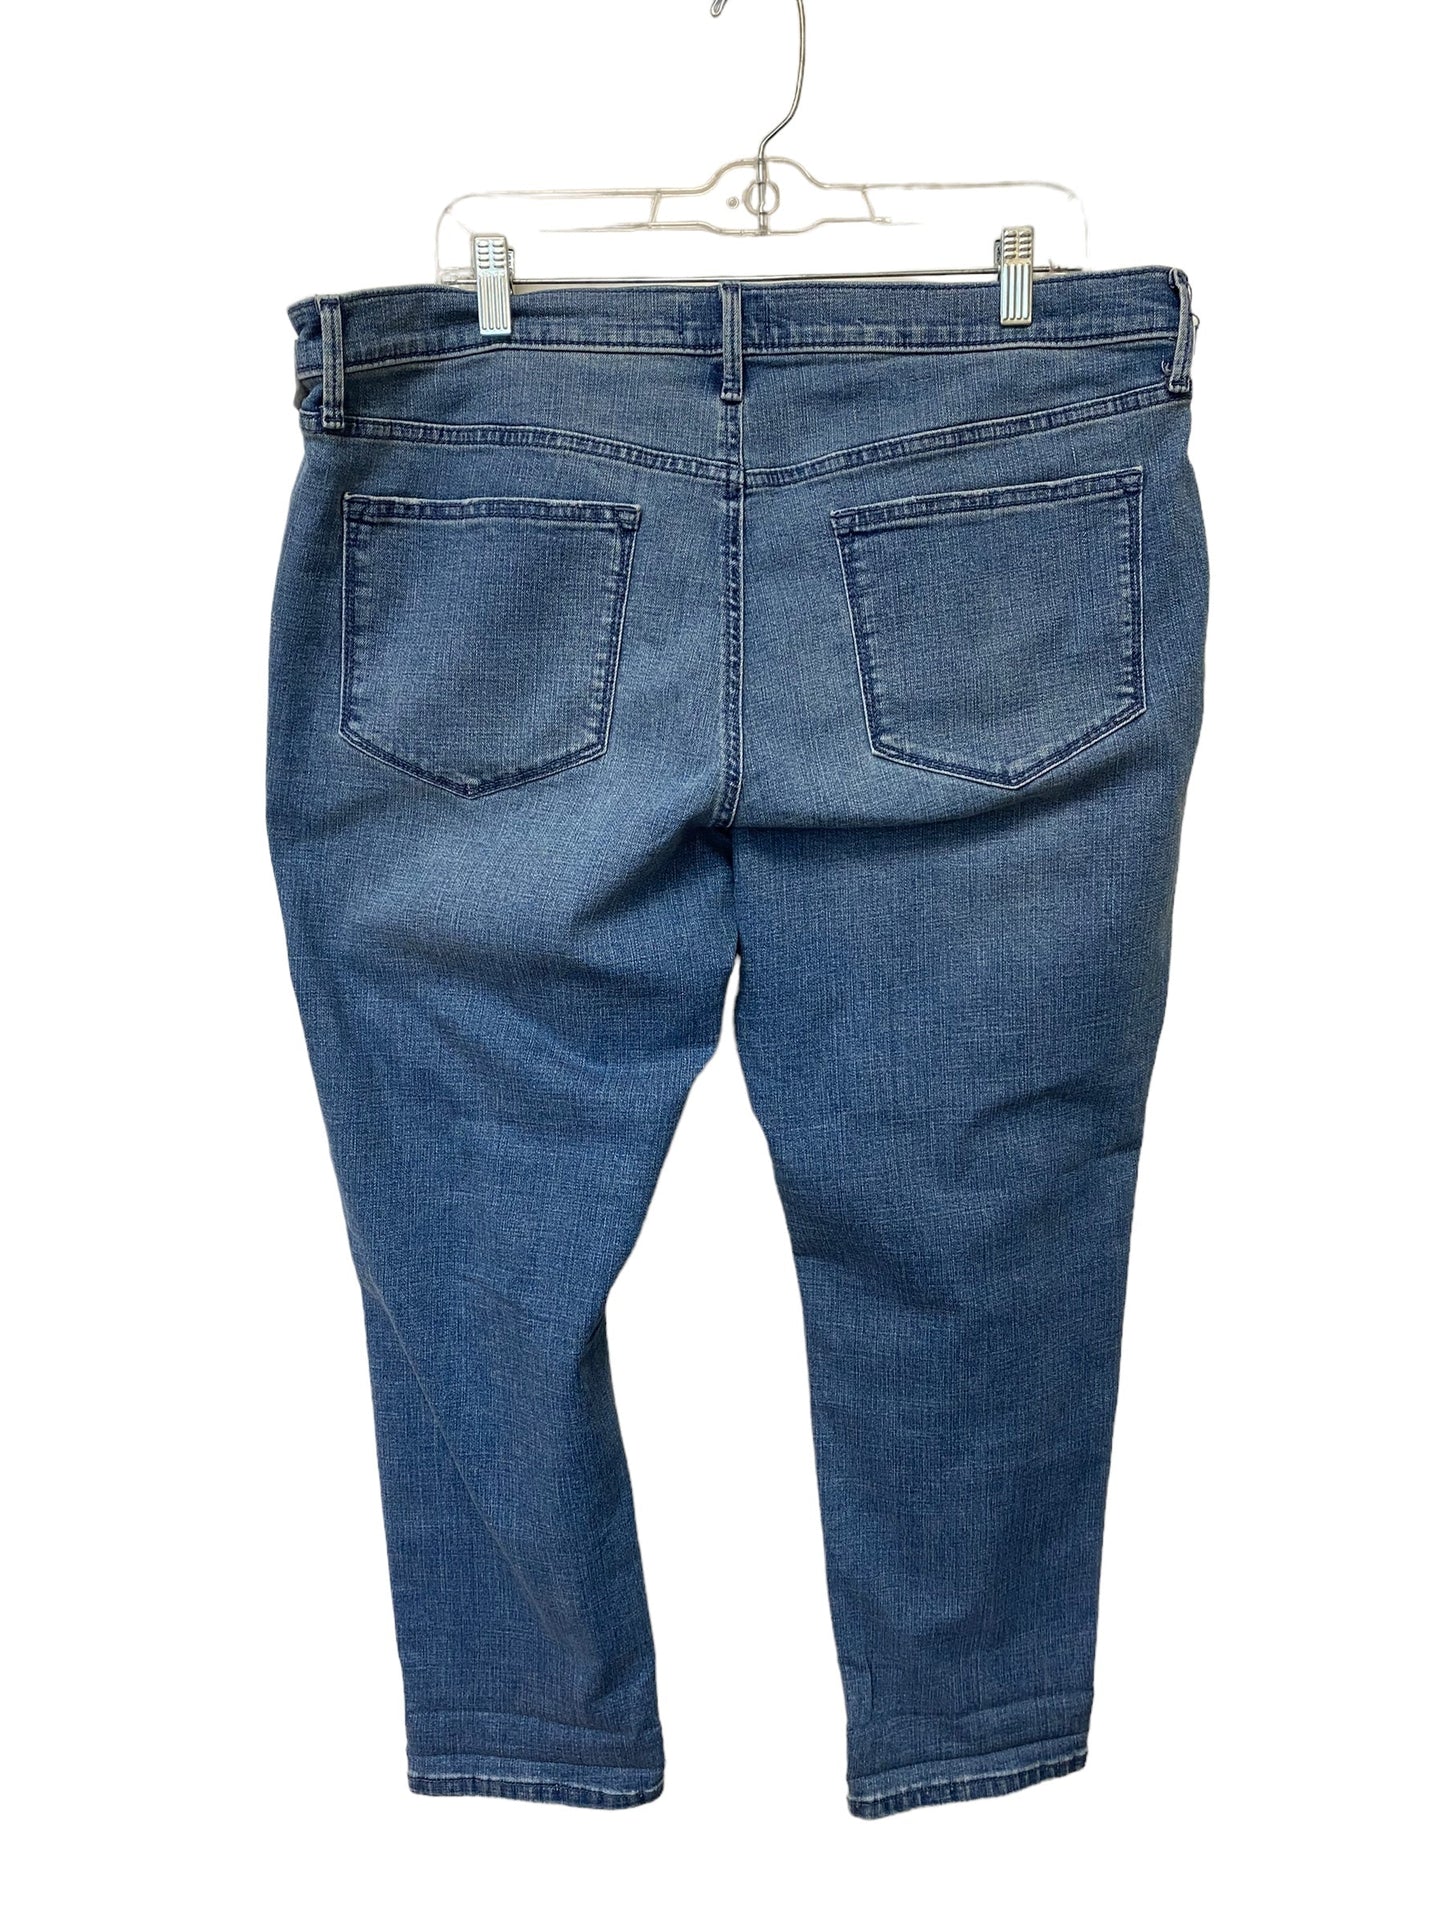 Jeans Boyfriend By Sonoma  Size: 16